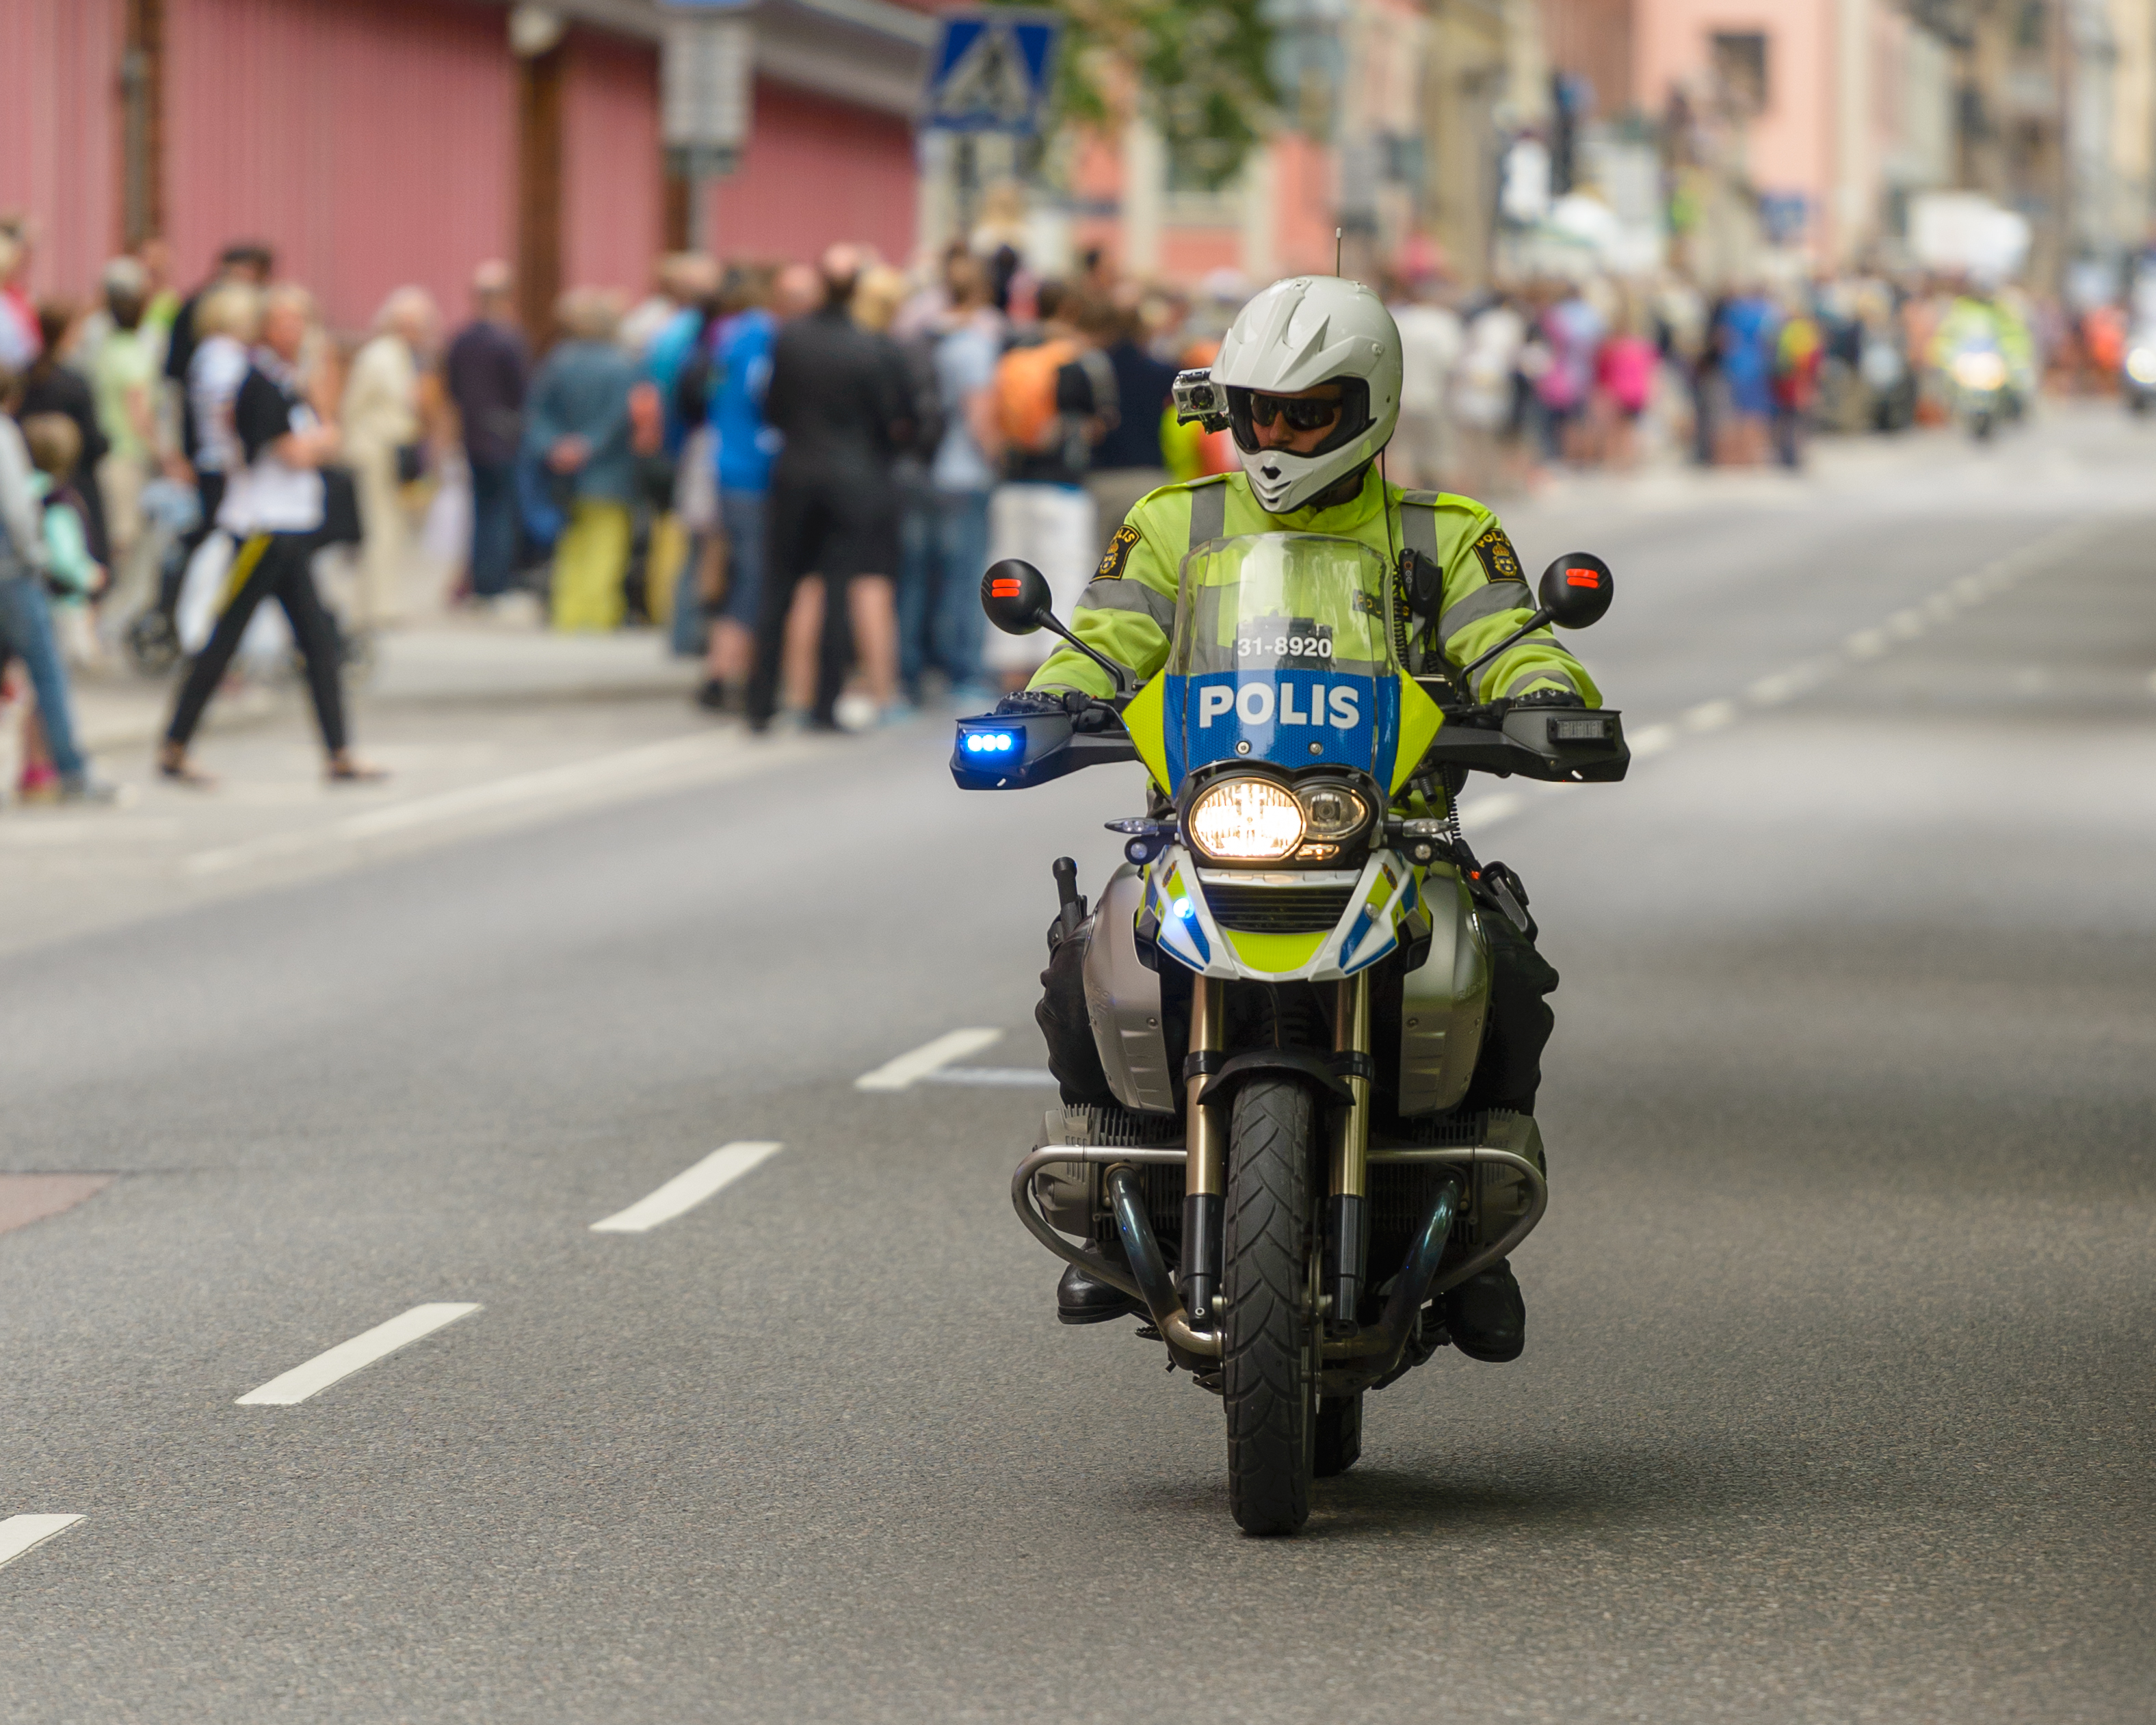 Police motorcycle Stockholm Marathon 2013